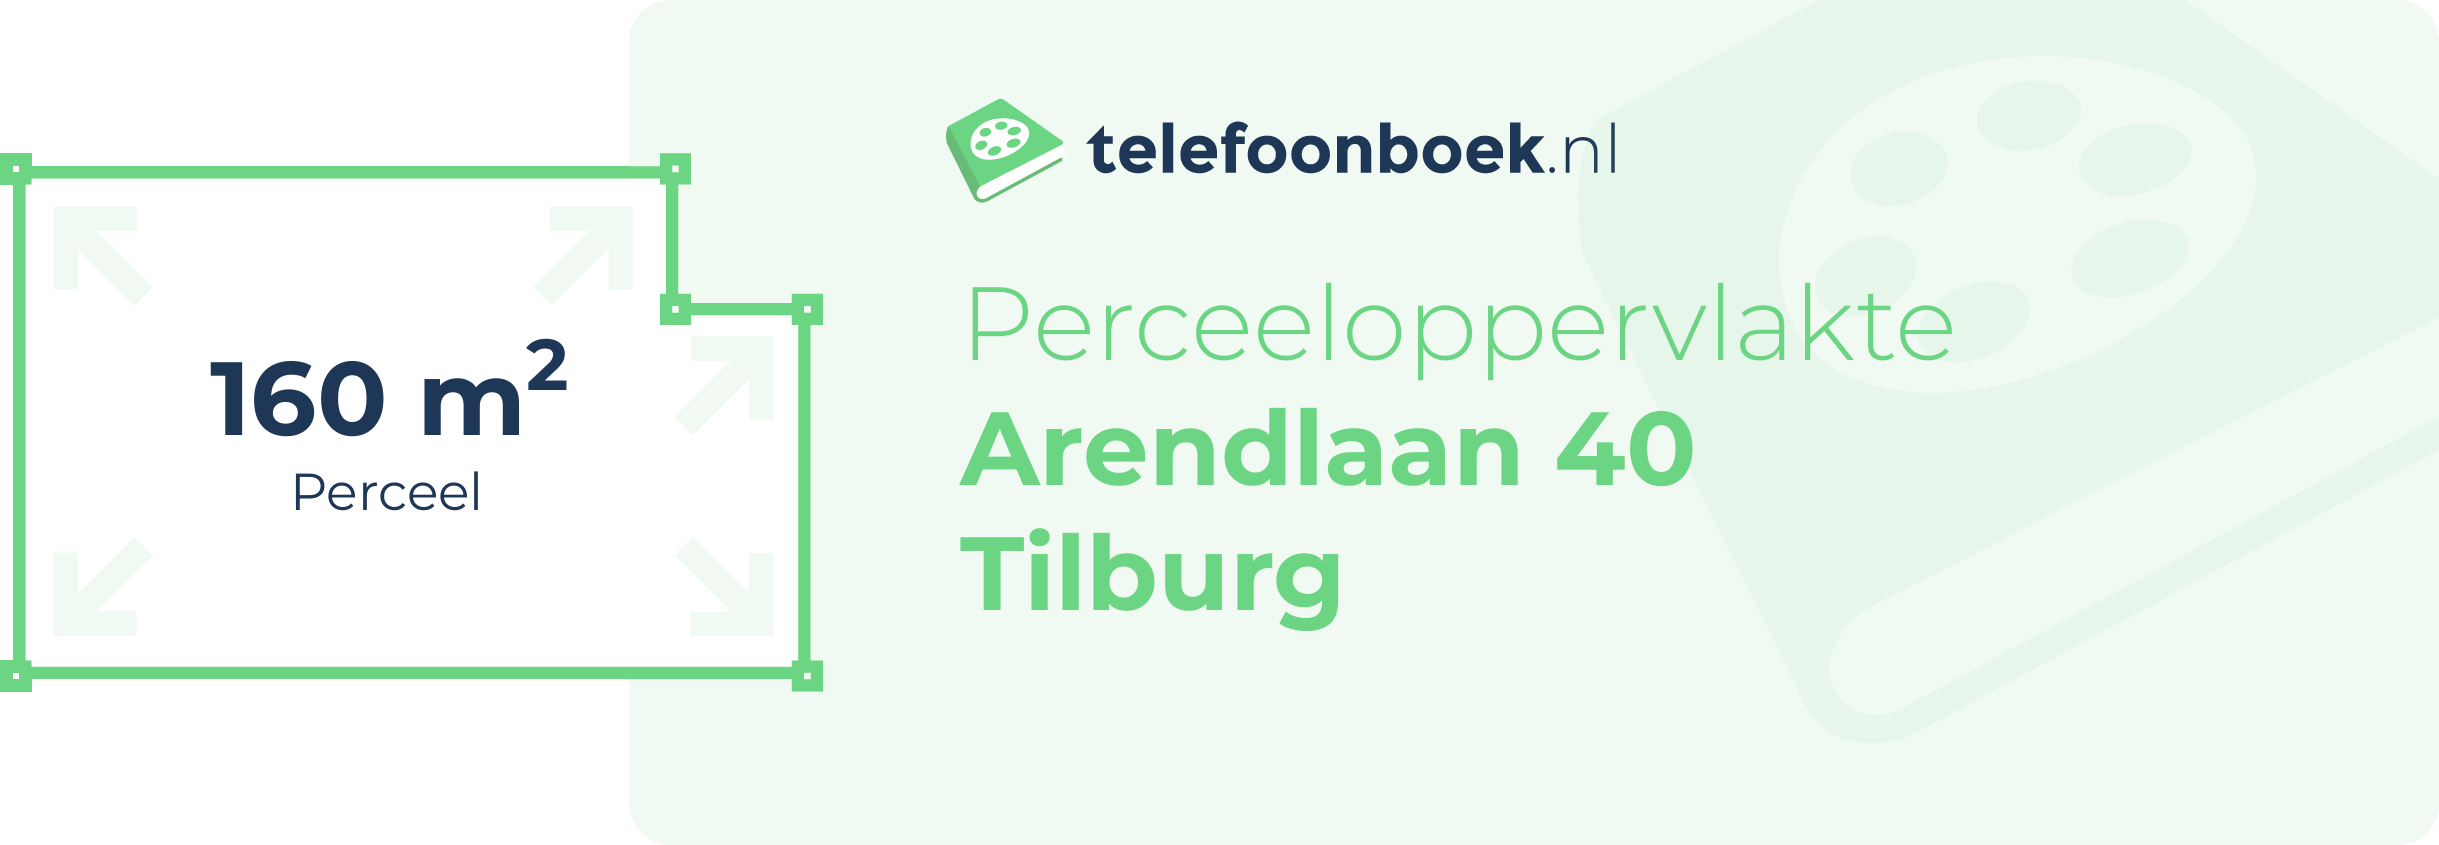 Perceeloppervlakte Arendlaan 40 Tilburg